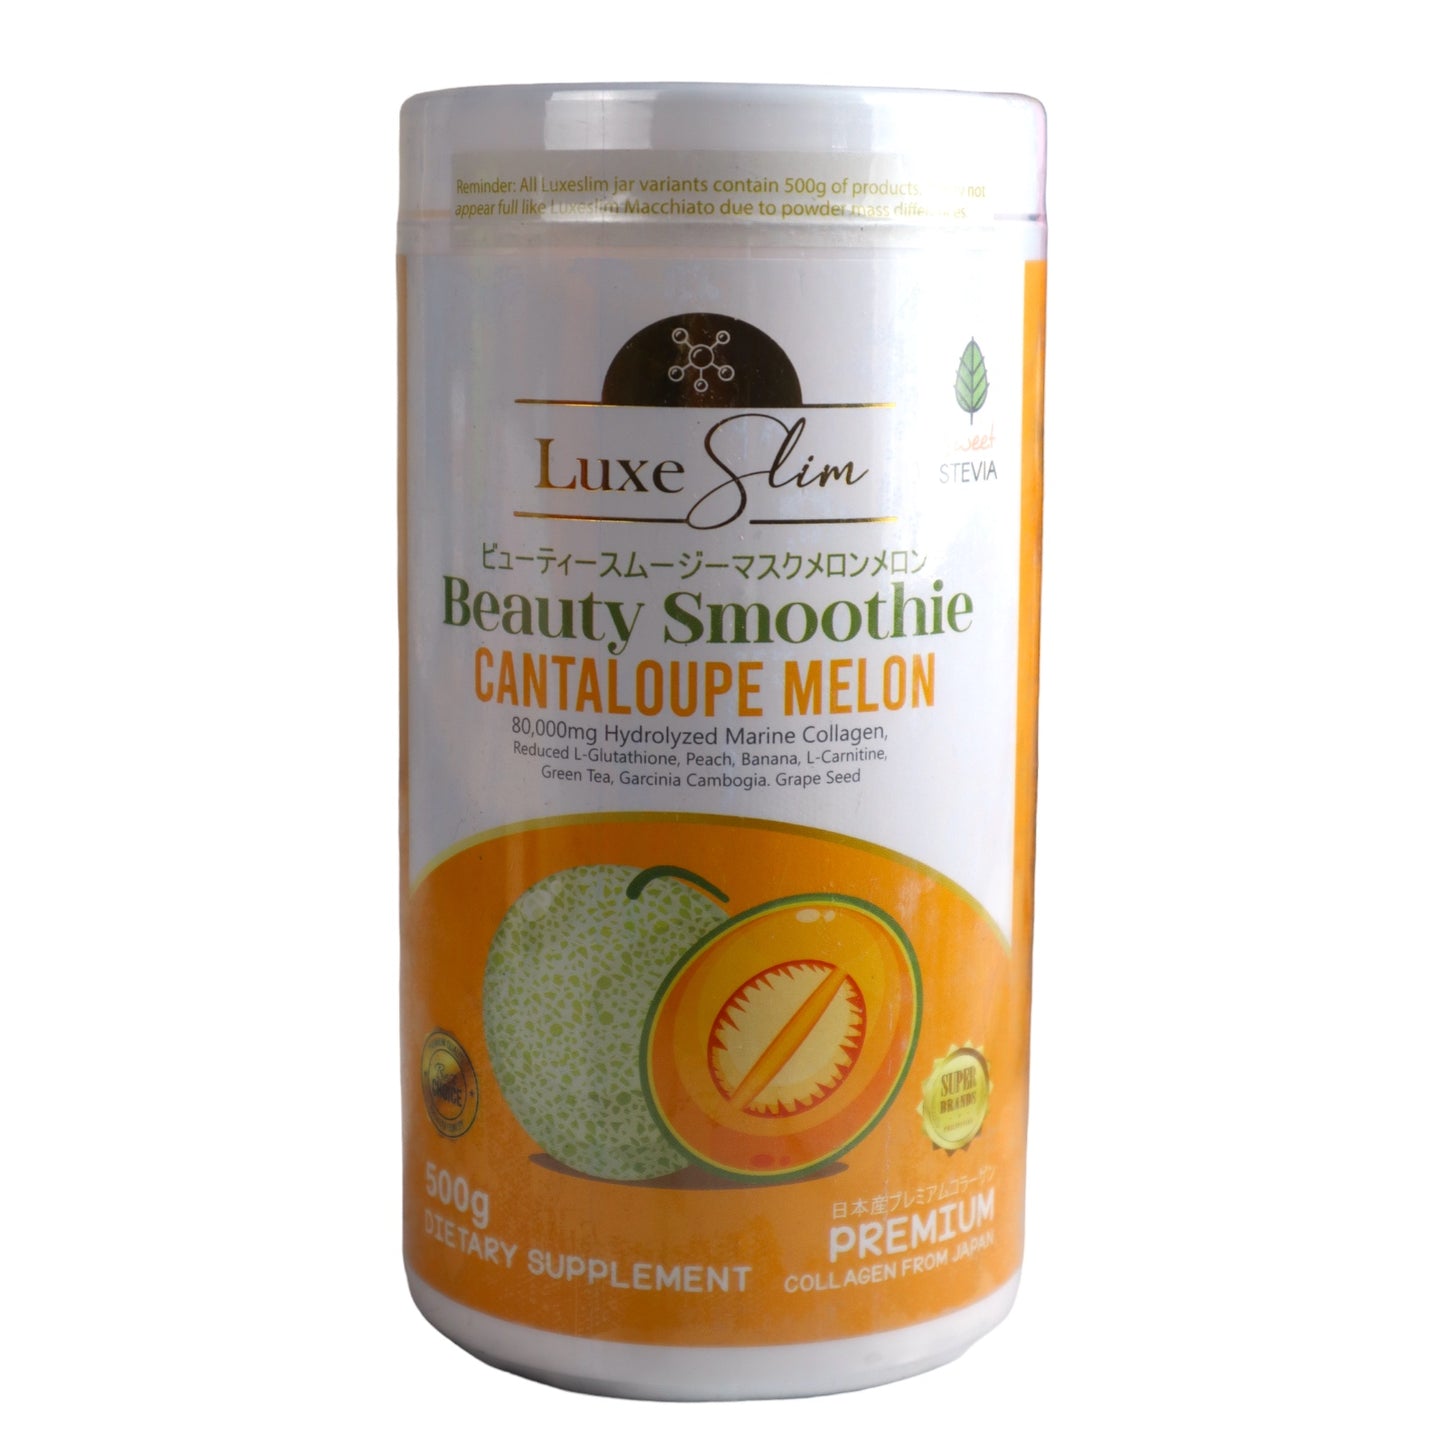 Luxe Slim Beauty Smoothie Cantaloupe Melon Half Kilo